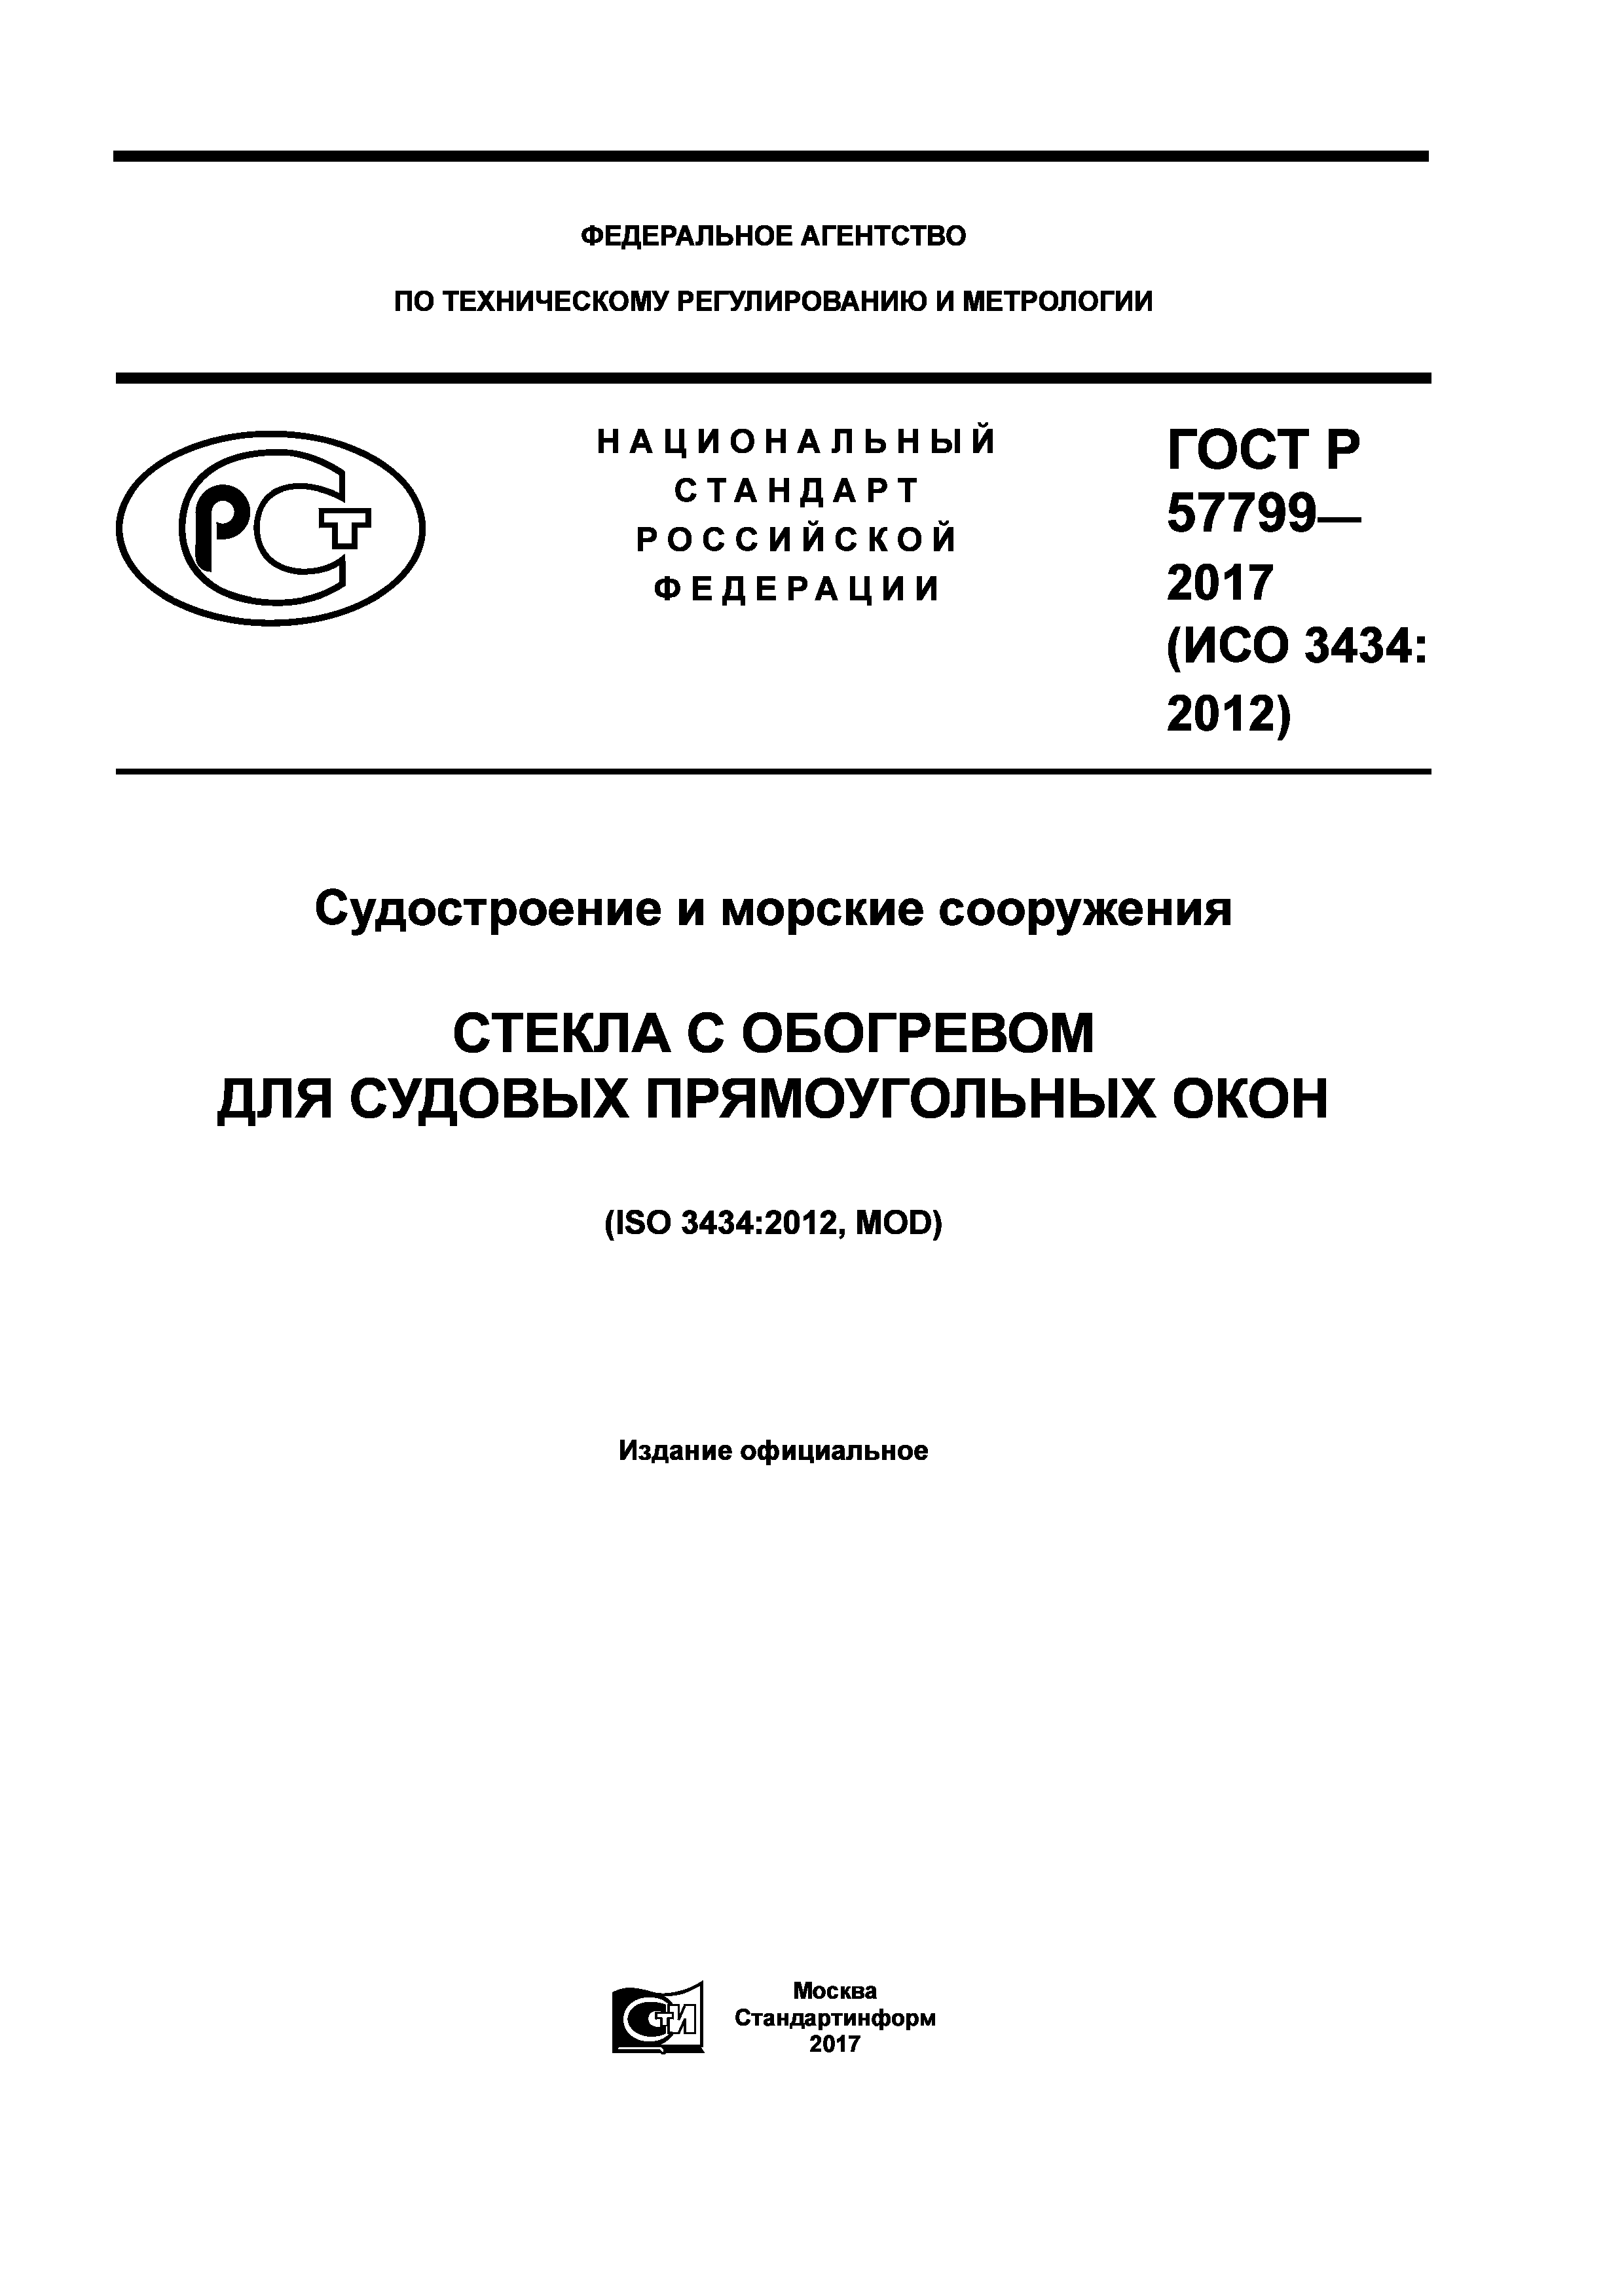 ГОСТ Р 57799-2017